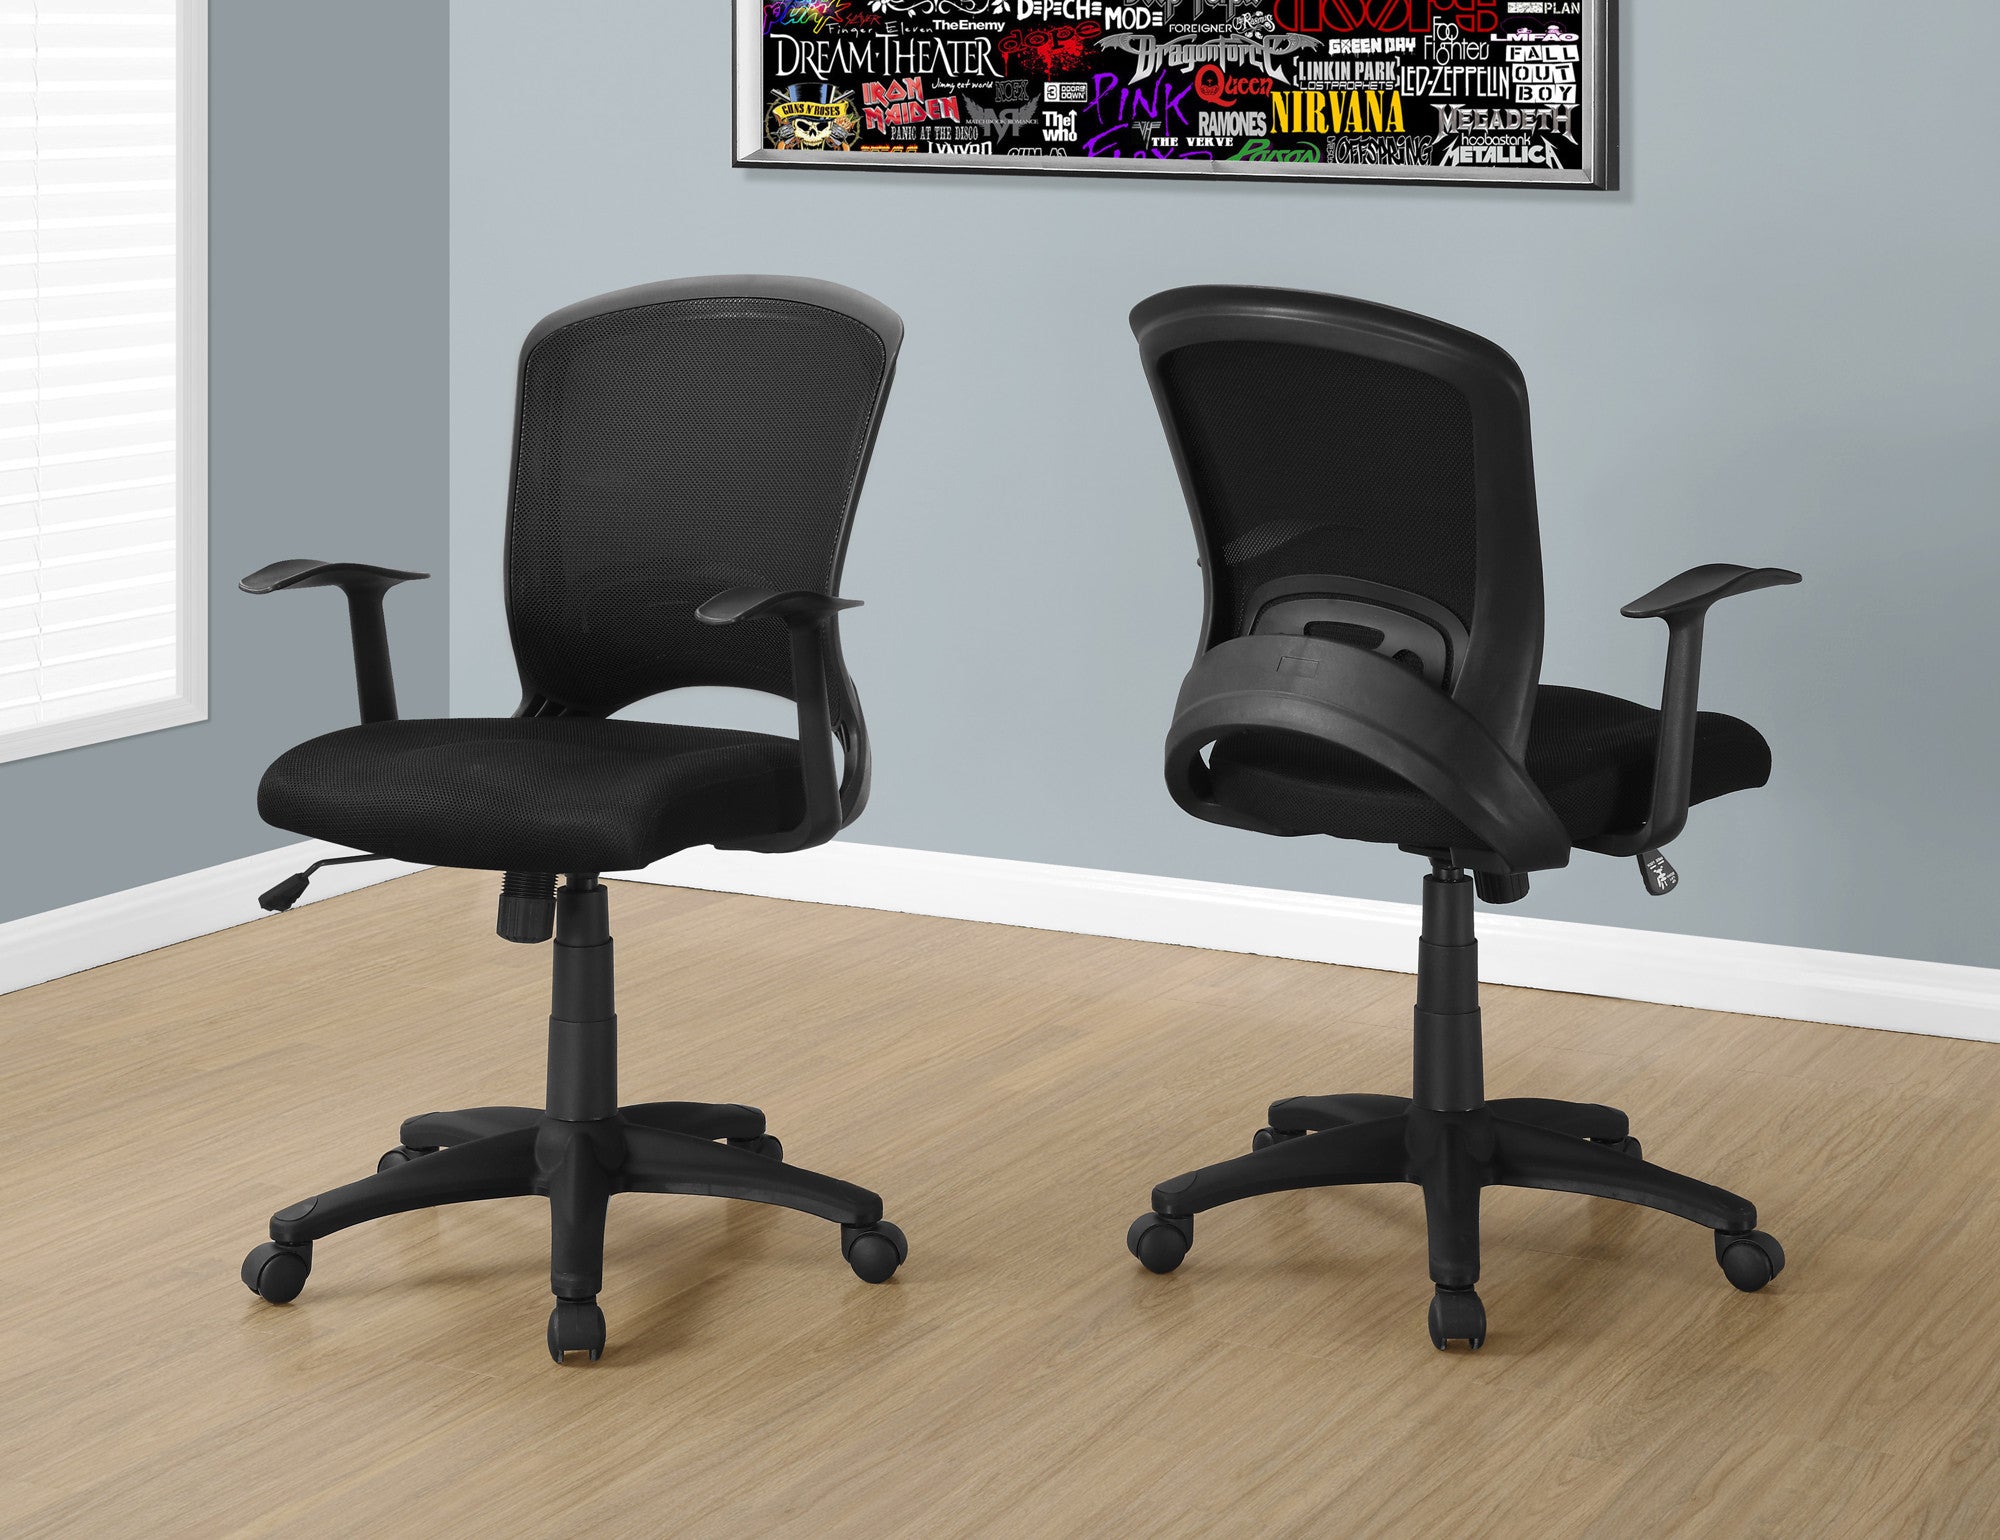 Comfortable & Ergonomic Black Mesh Office Chair - OfficeDesk.com